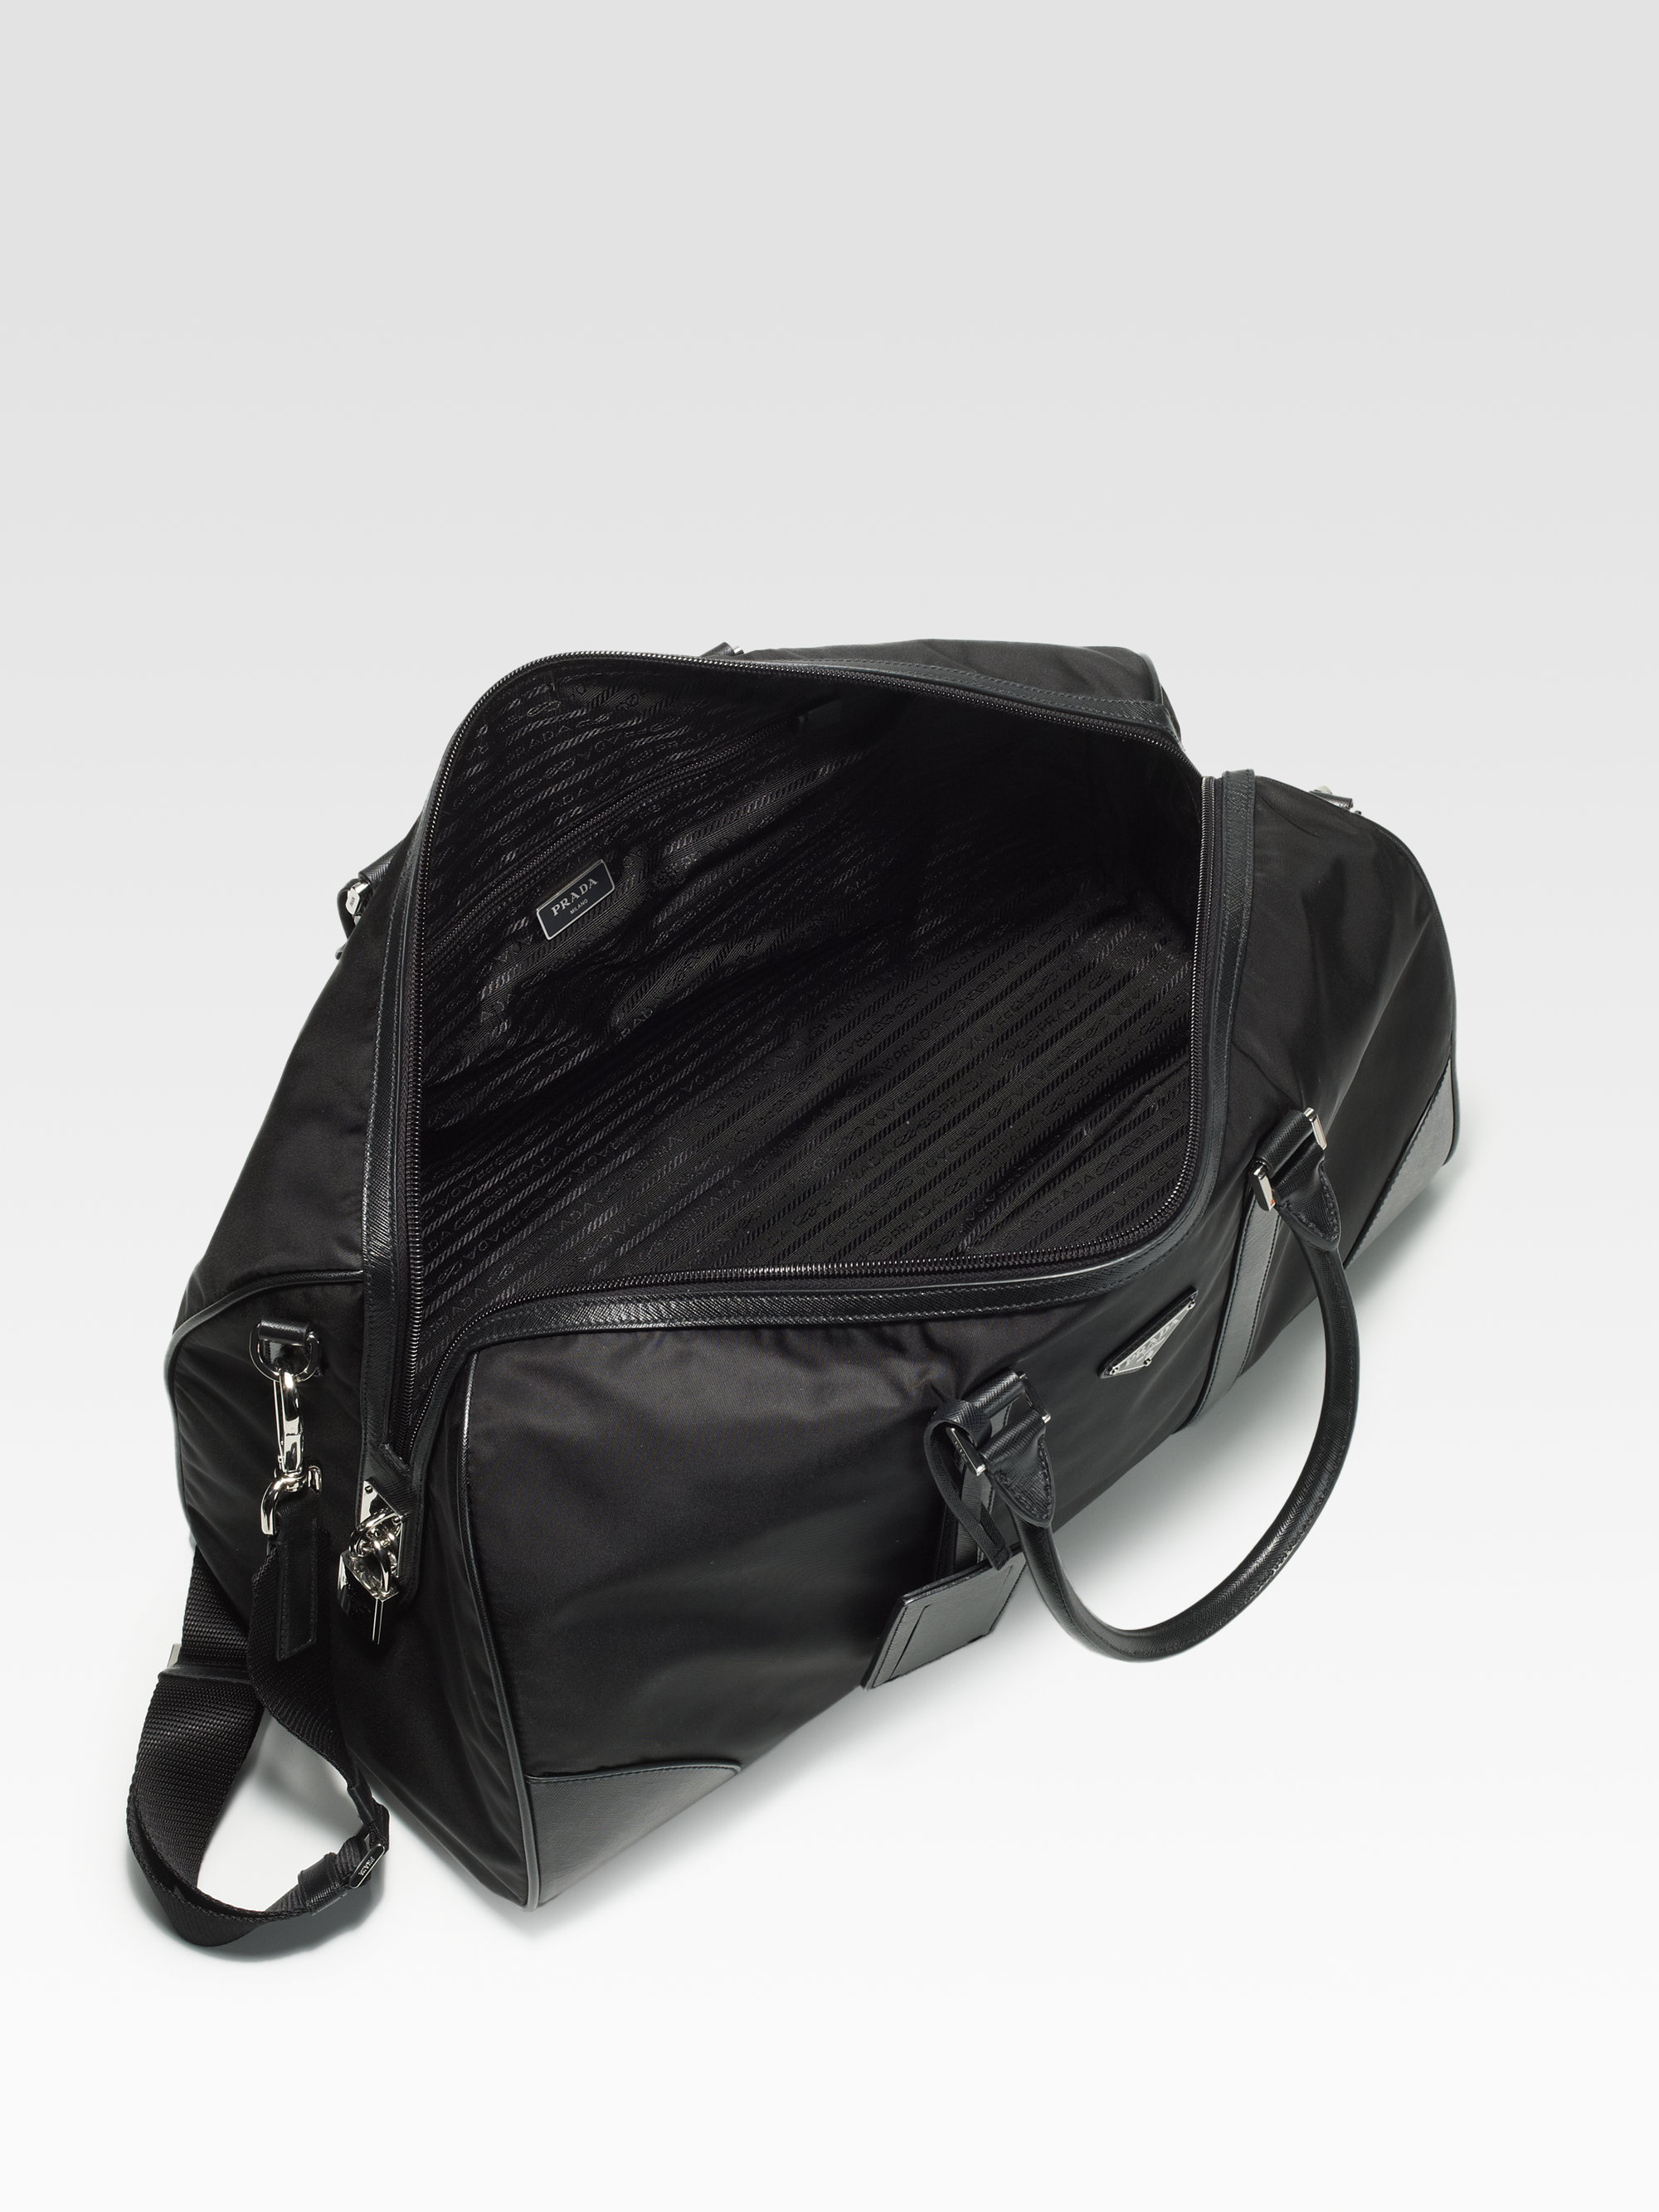 Prada Nylon Duffel Bag in Black for Men - Lyst